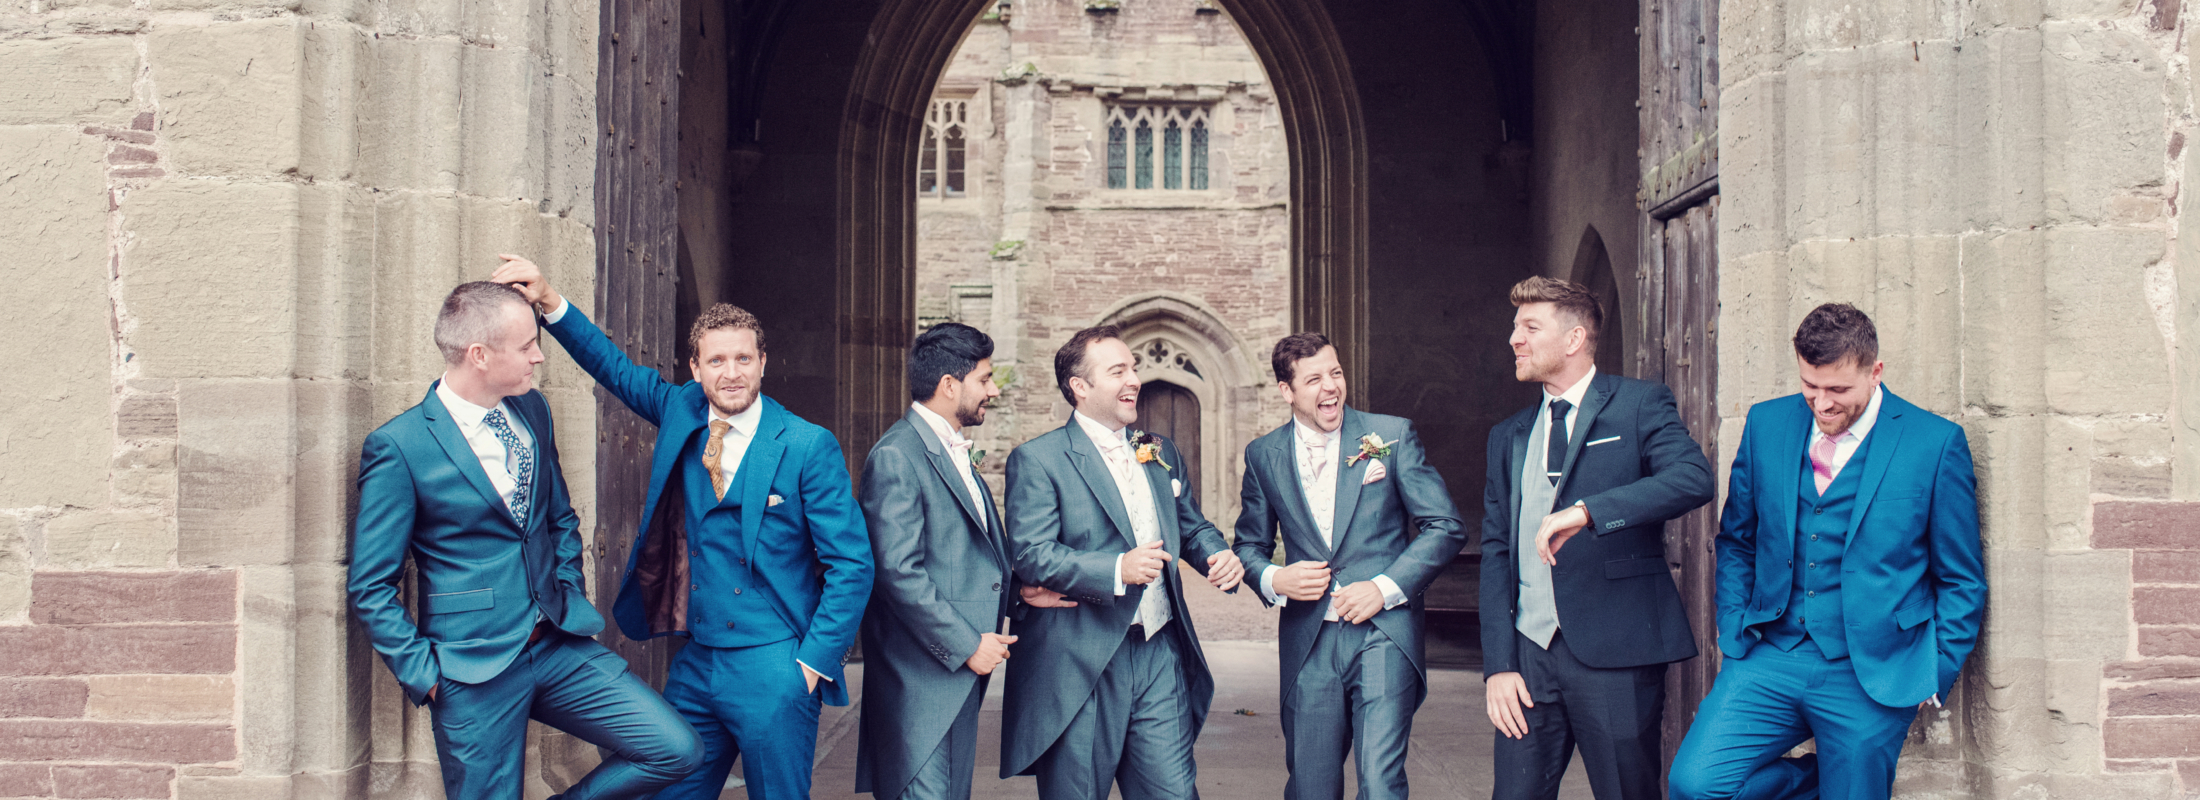 A groom and his groomsmen laughing in a castle doorway